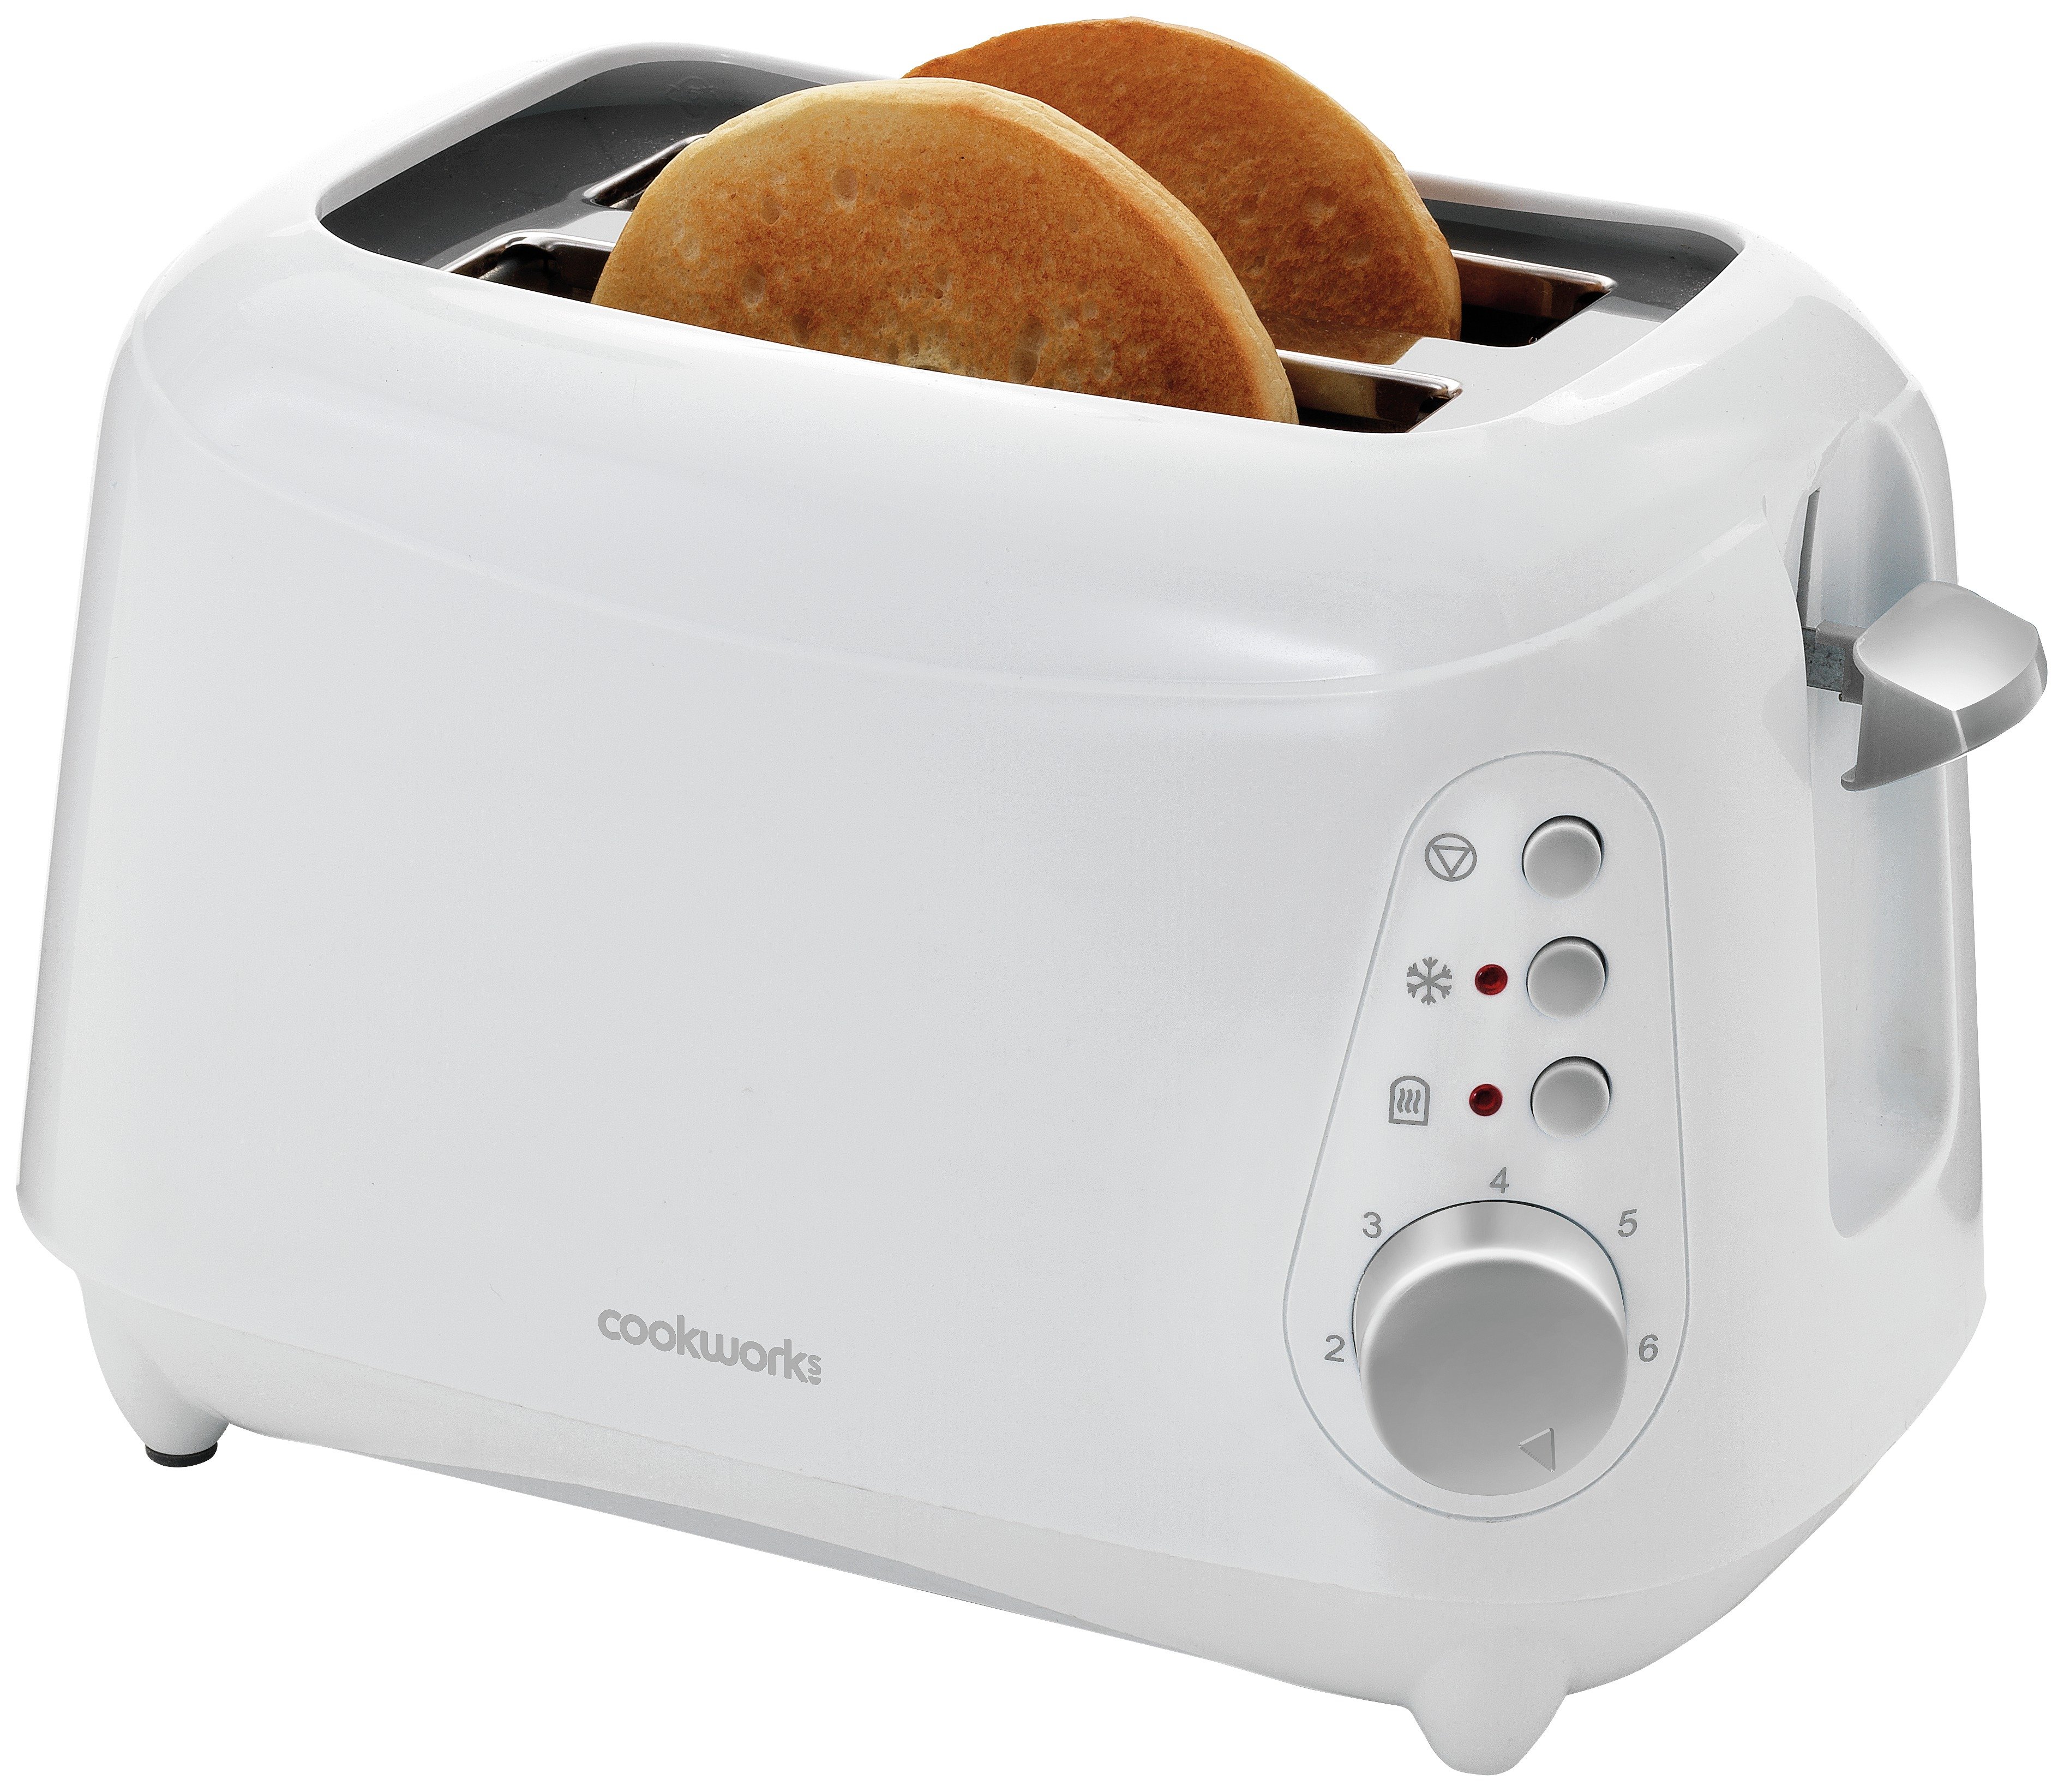 'Cookworks 2 Slice Toaster 900 Watts - White